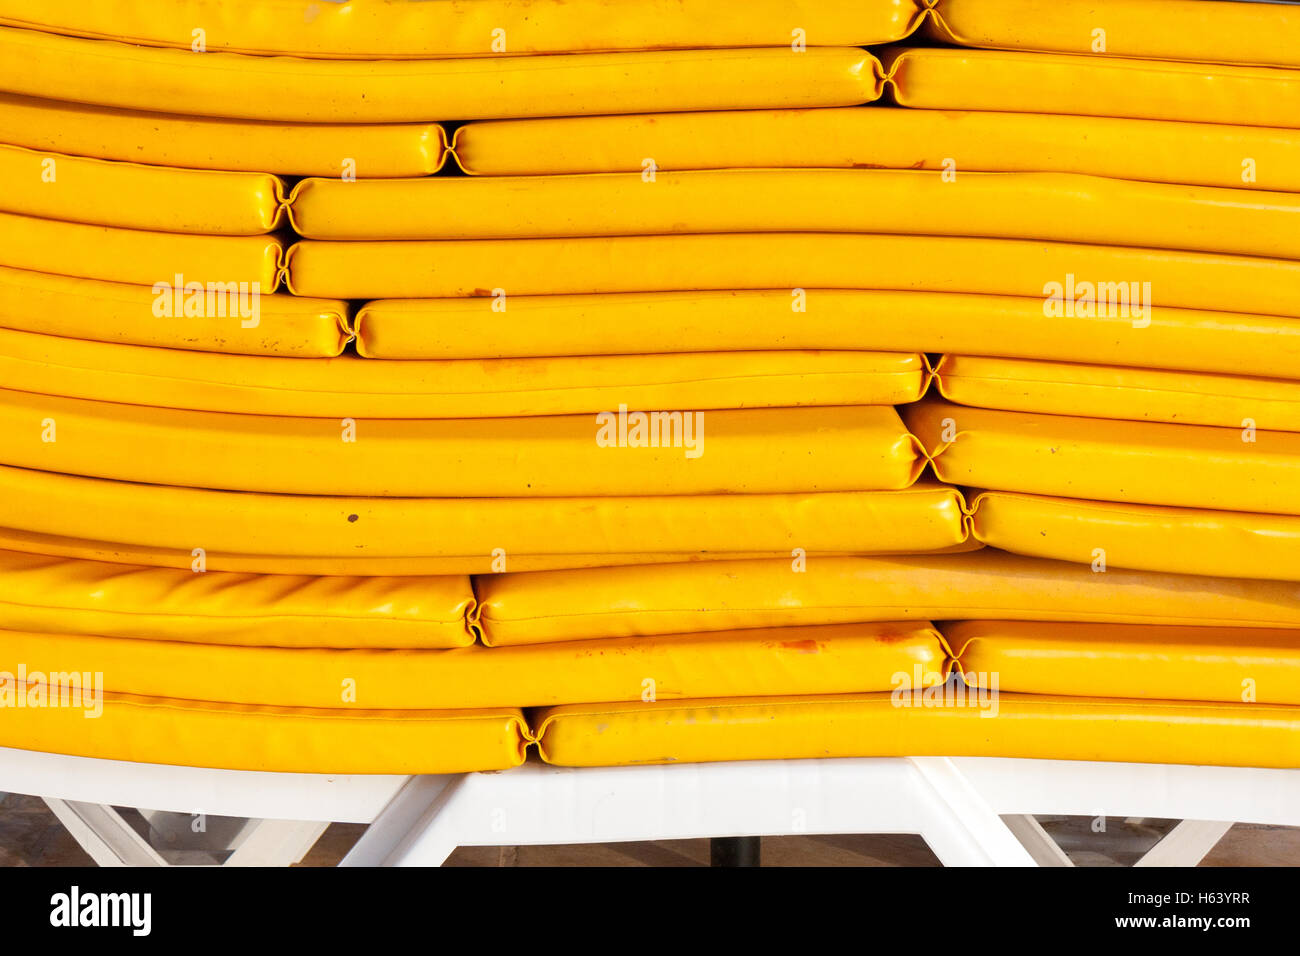 yellow sun bed mattresses Stock Photo